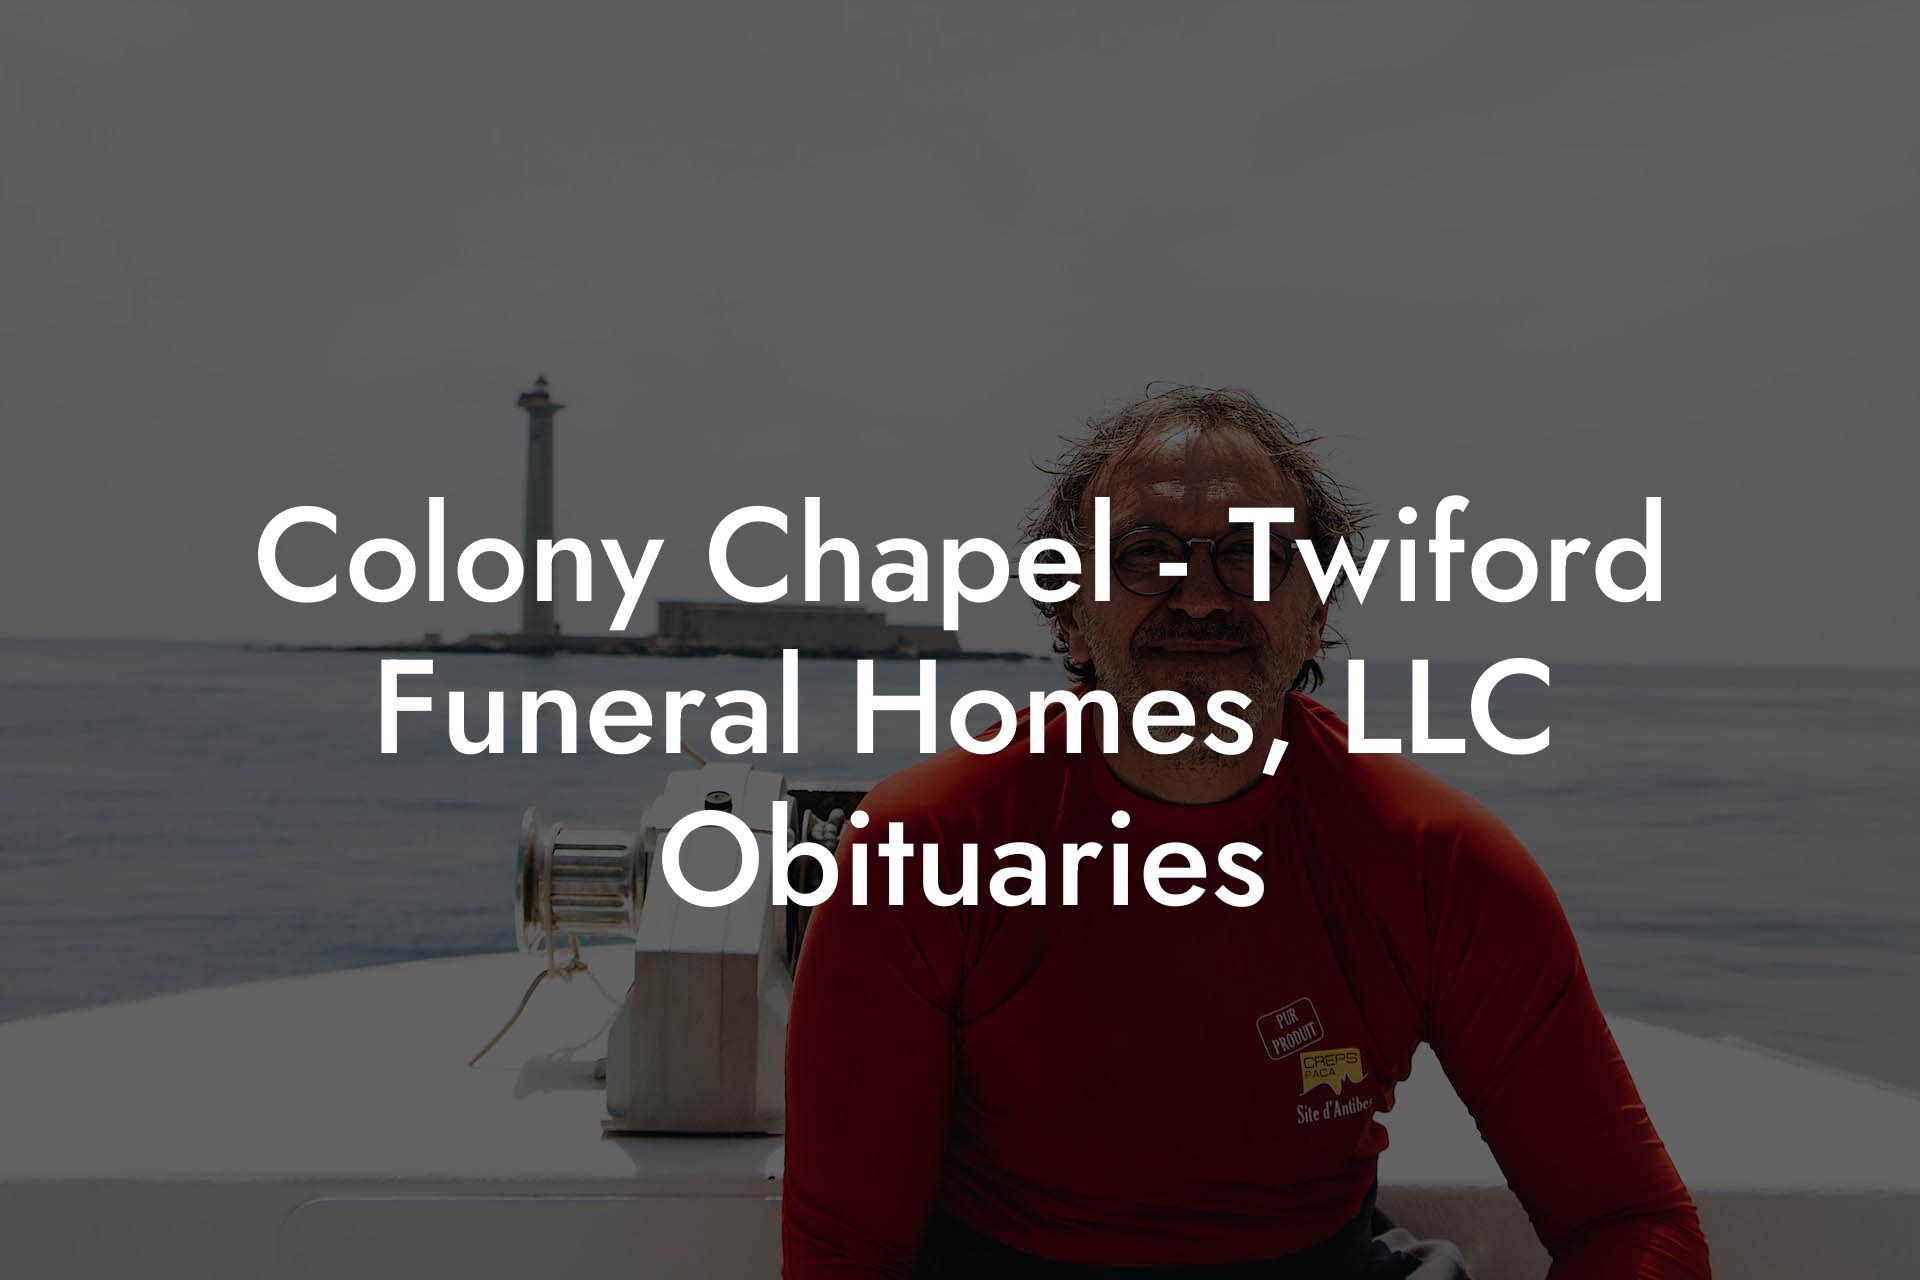 Colony Chapel - Twiford Funeral Homes, LLC Obituaries